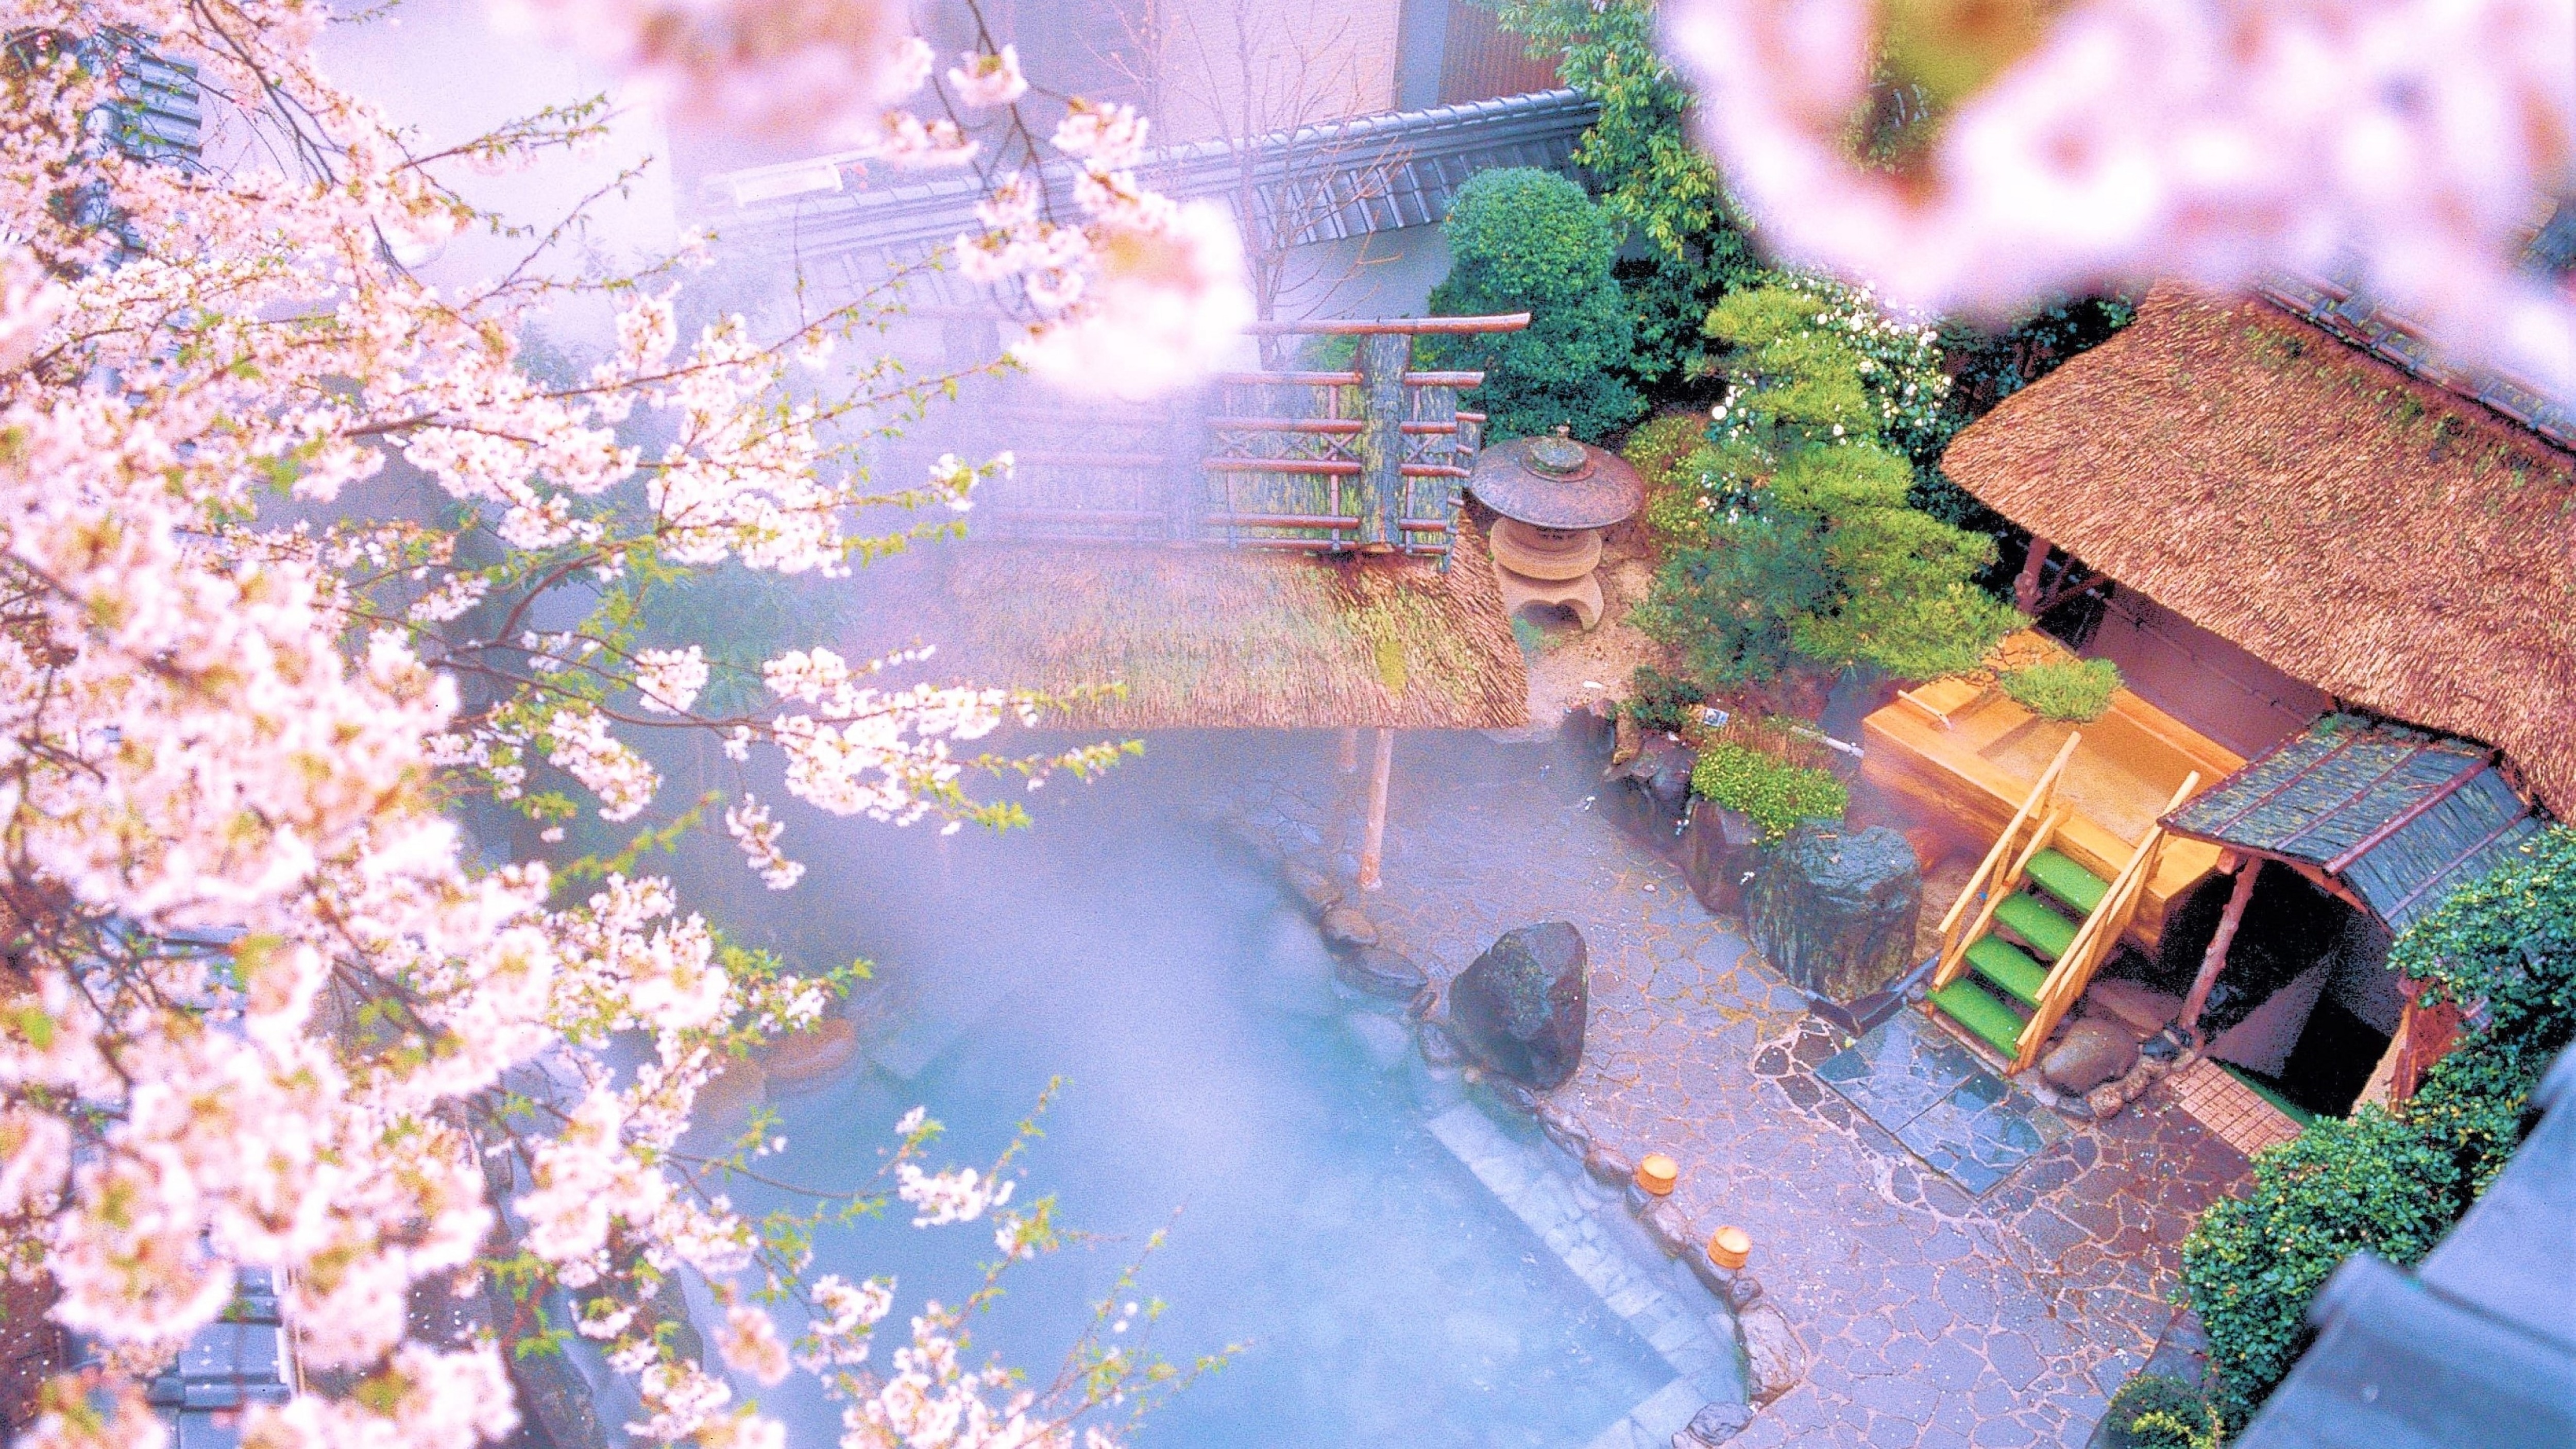 Asanoya's proud open-air bath in full bloom cherry blossoms-Orihime